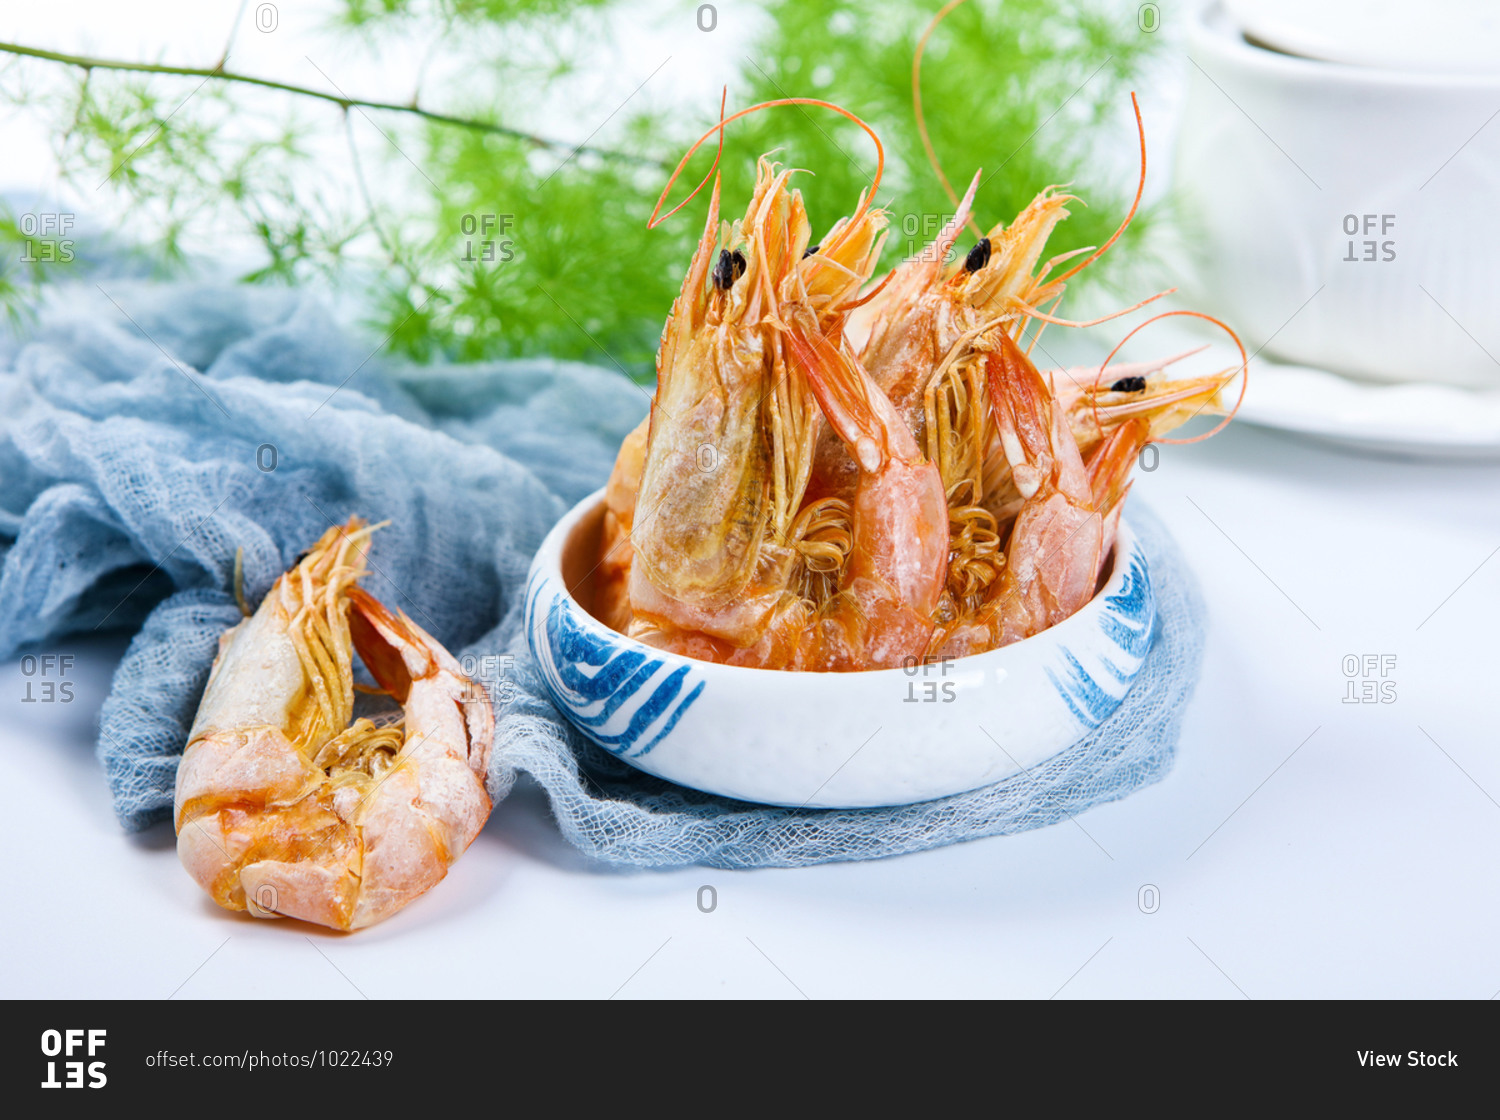 The river shrimp set out on a platter